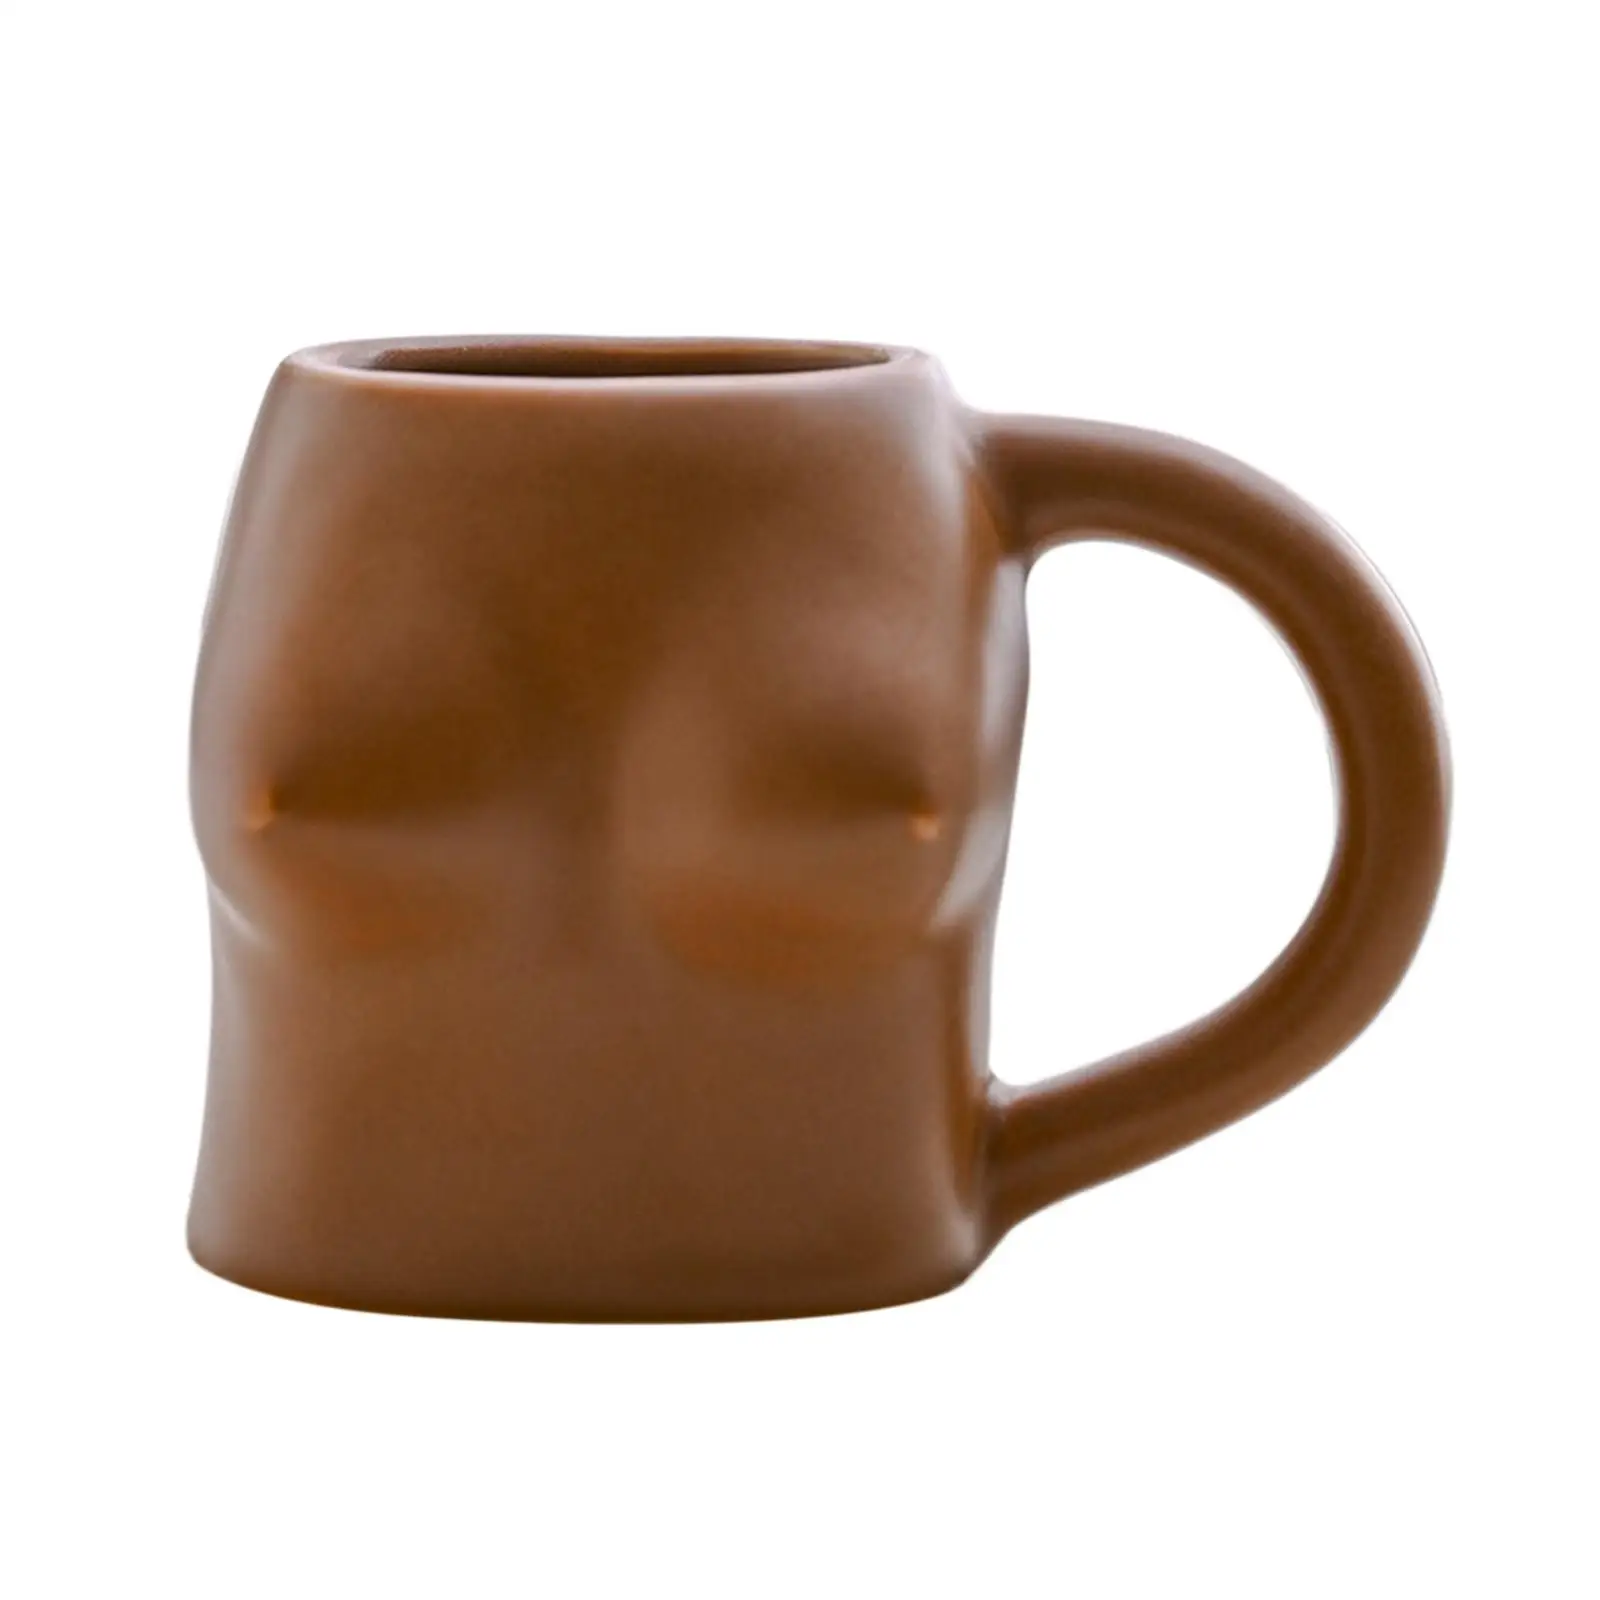 Creative Coffee Mug Ceramic Female Body Art Cup Household Milk Mug for Gifts Home Wedding Party Office